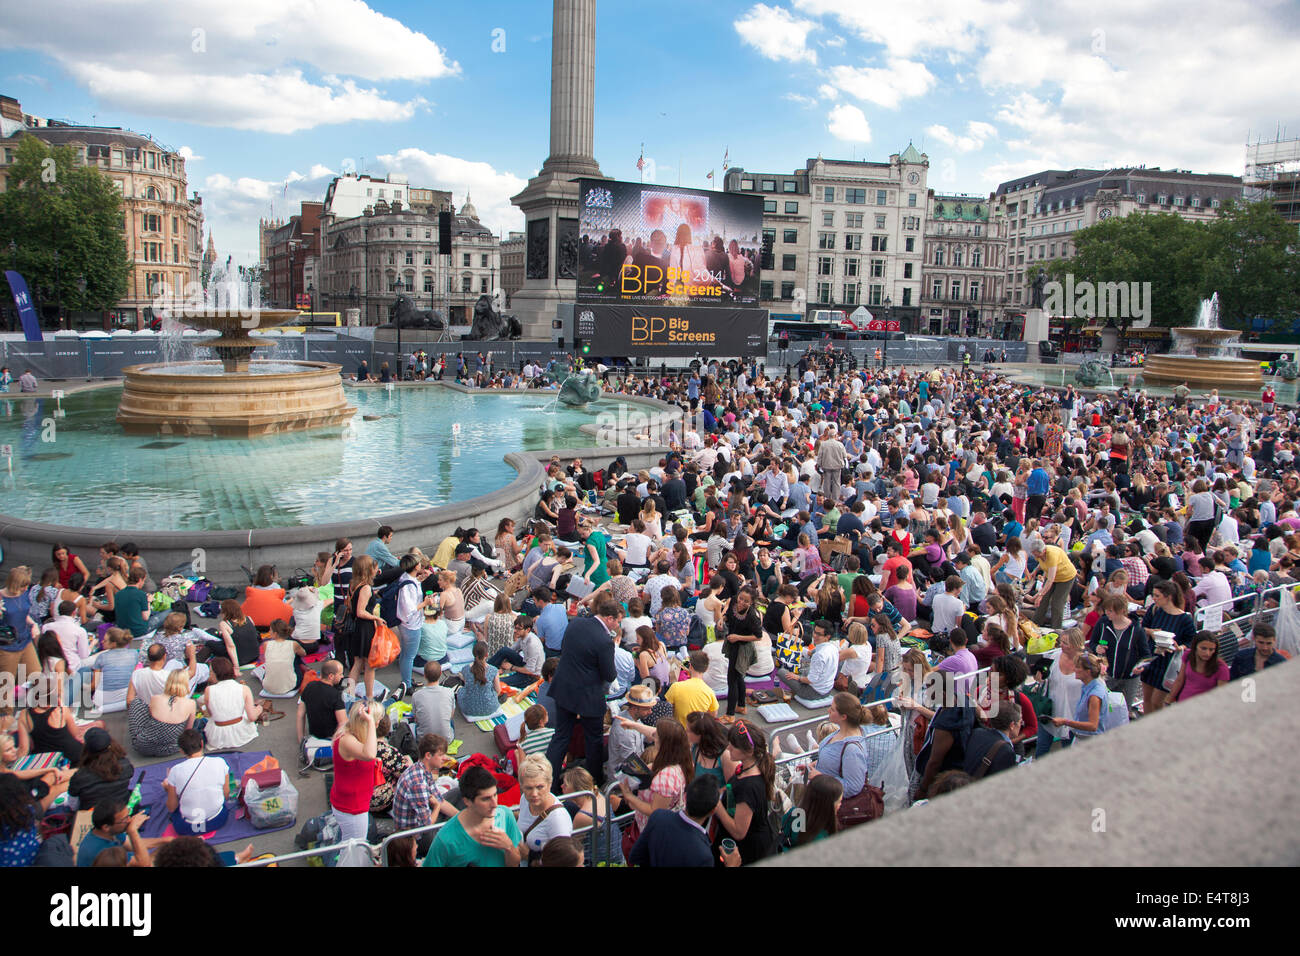 15/07/2014 London, UK - BP Summer Screens, live screening of La Boheme from the Royal Opera House Trafalgar Square Stock Photo